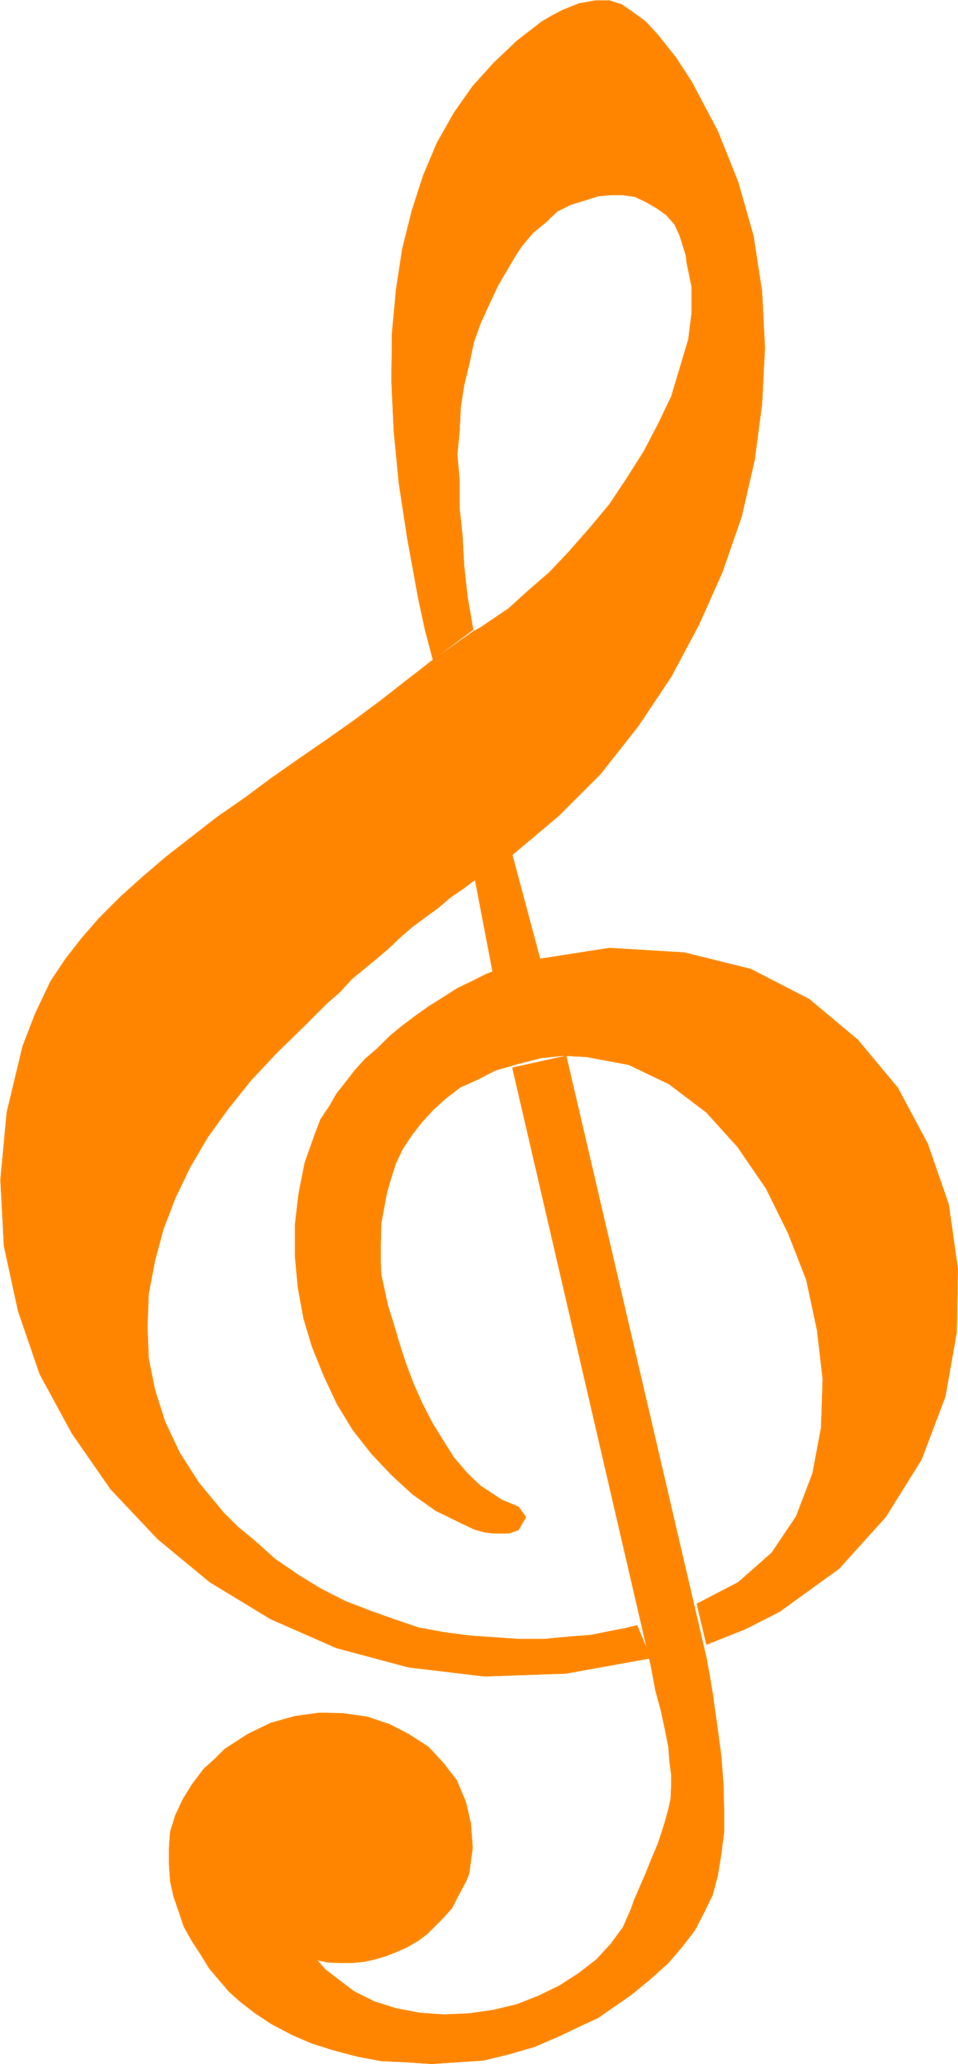 orchestra clipart music symbol